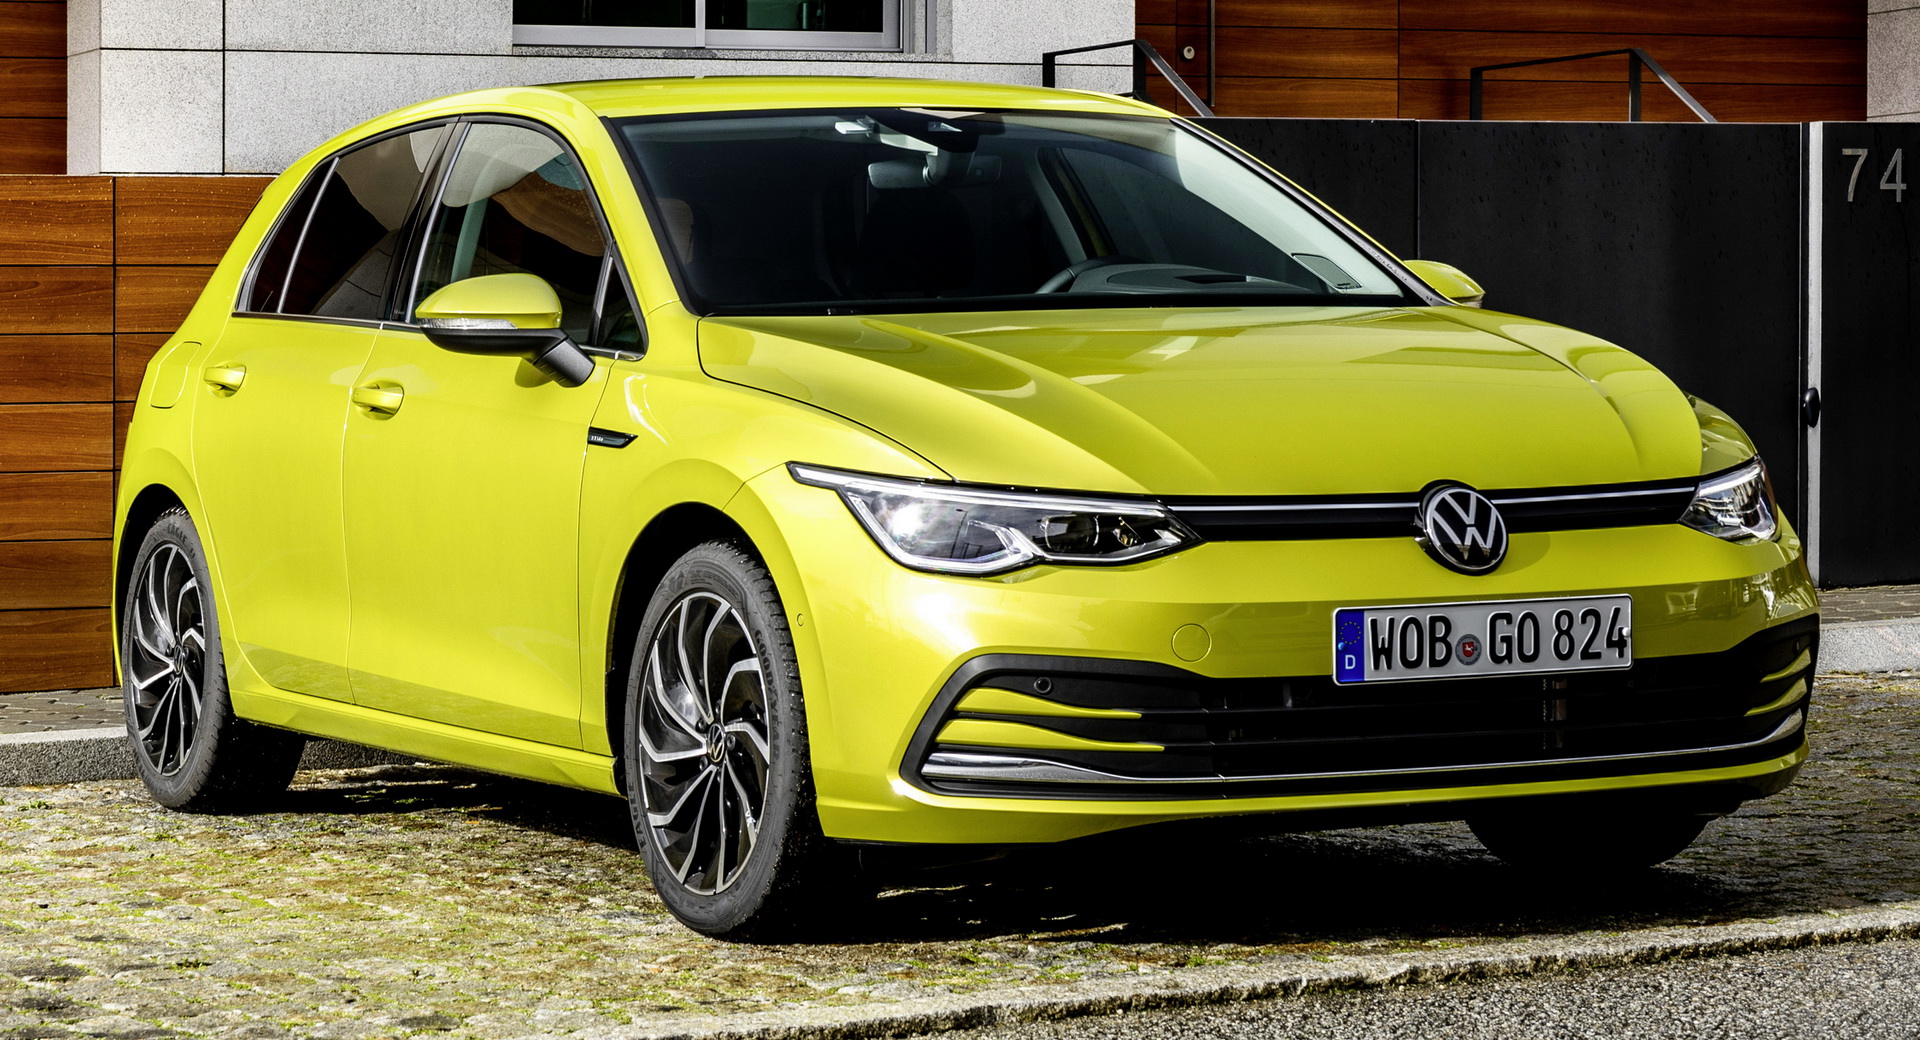 Evolution Of Volkswagen Golf: From Mk1 To The Latest Mk8 Presentation